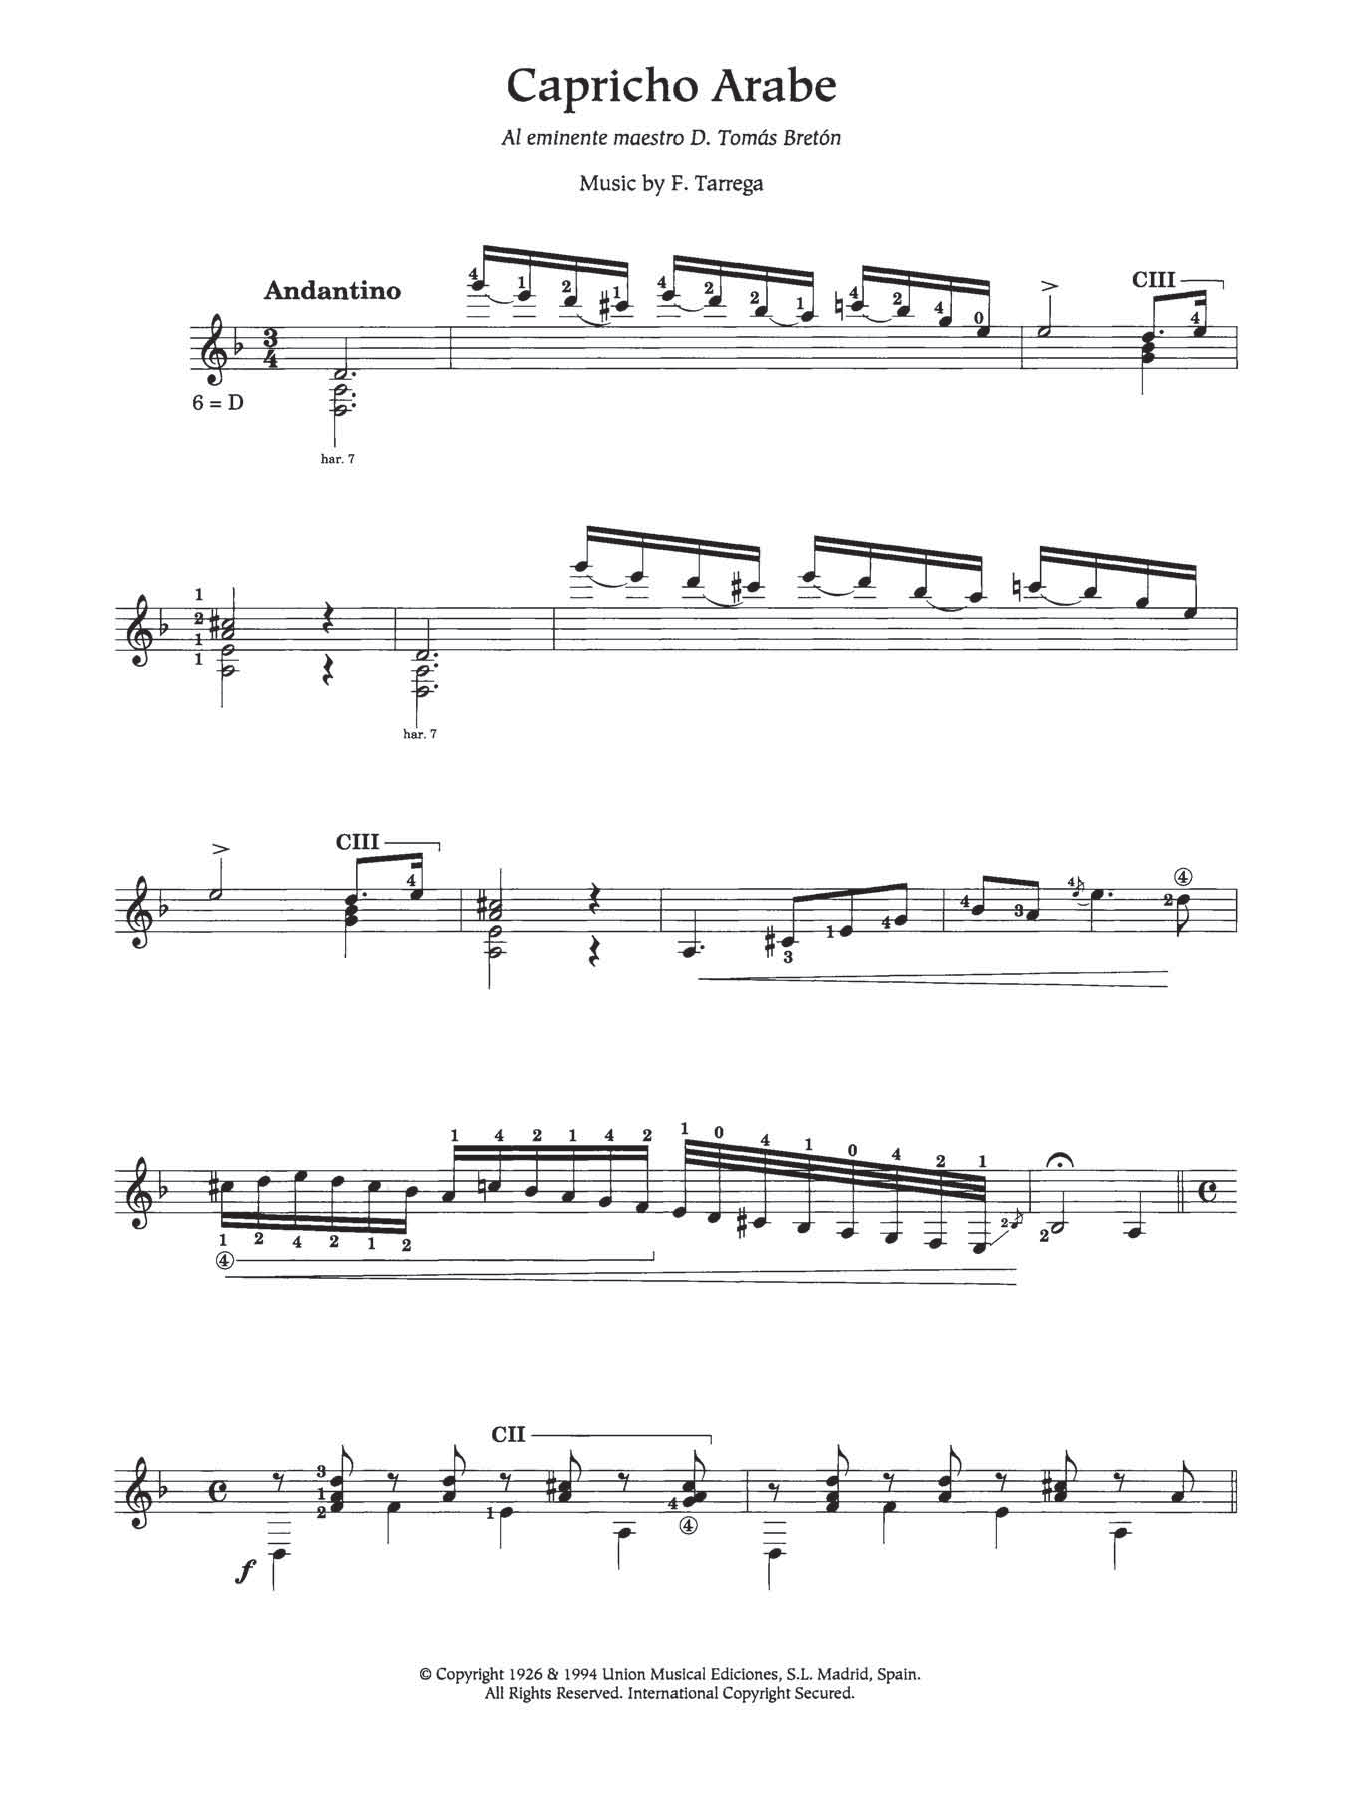 Francisco Tarrega Capricho Arabe Sheet Music Notes & Chords for Solo Guitar - Download or Print PDF